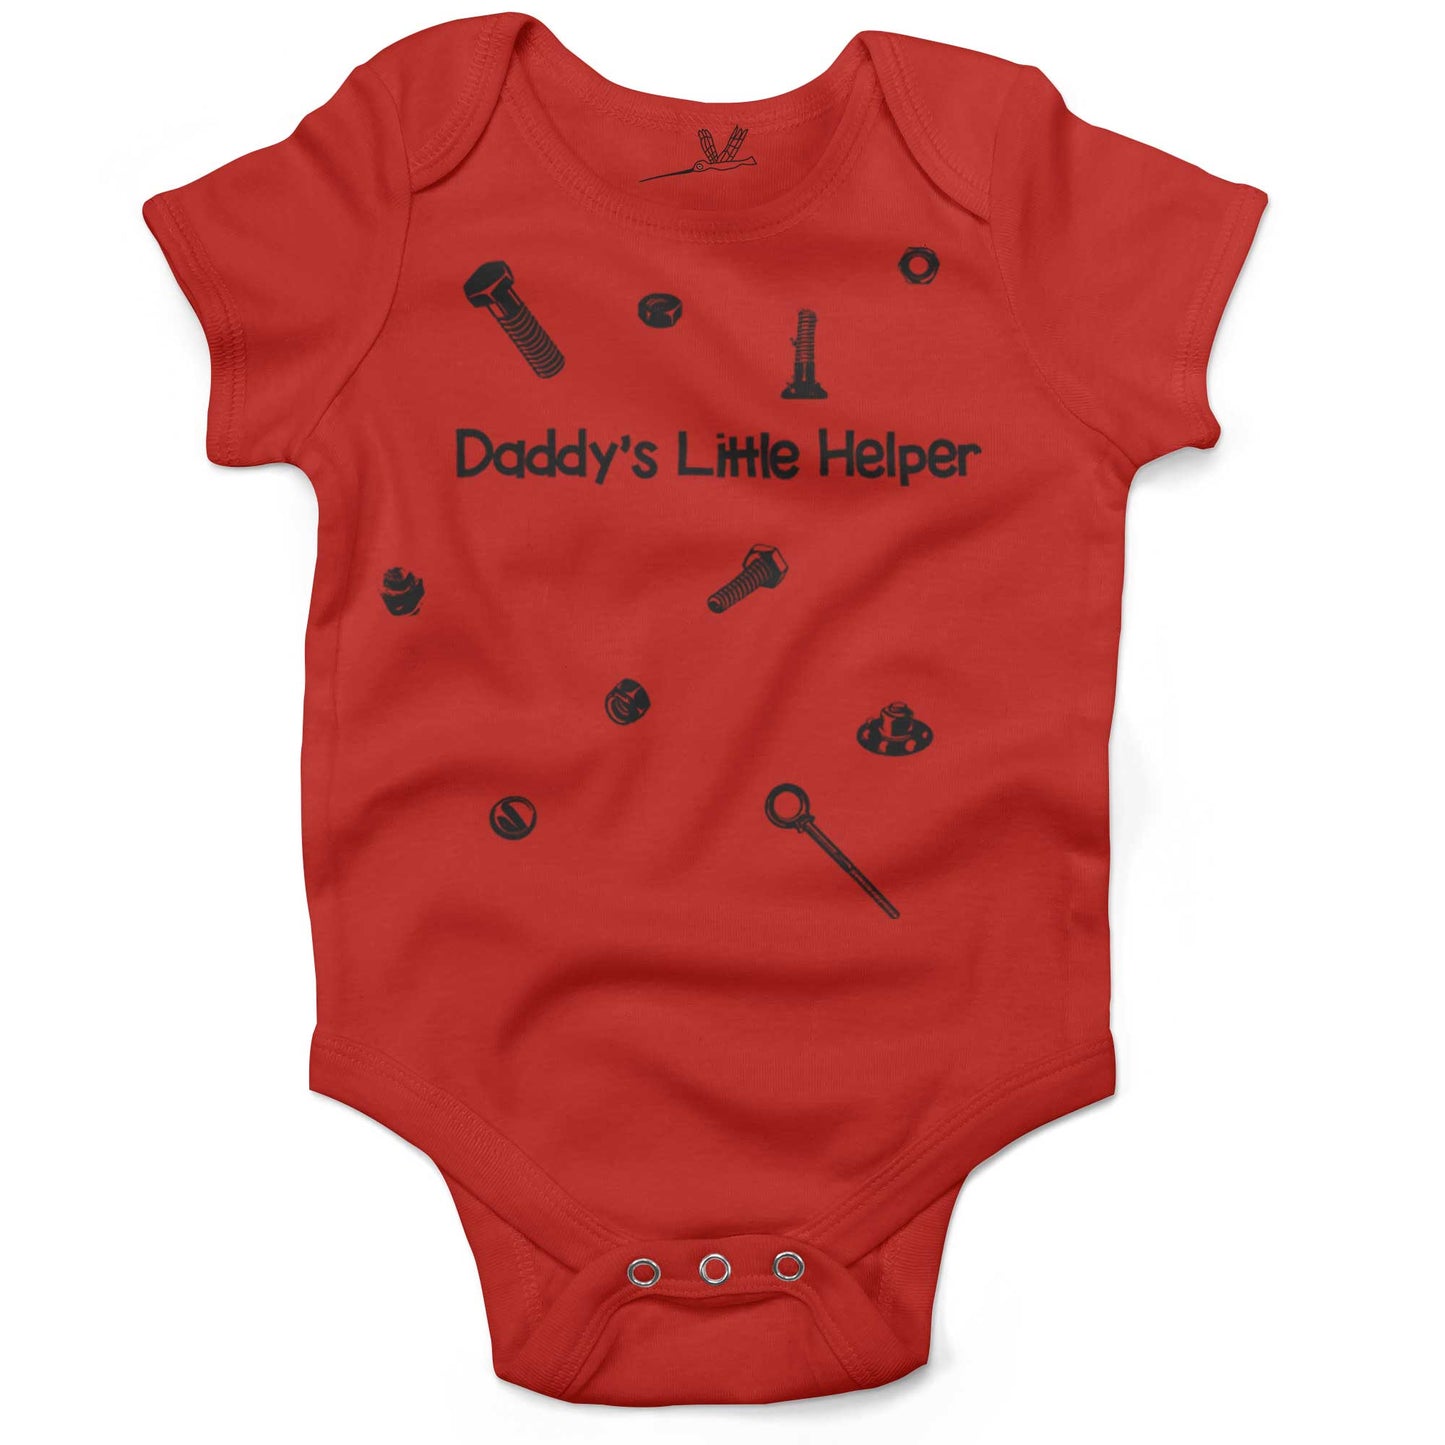 Daddy's Little Helper Infant Bodysuit or Raglan Baby Tee-Organic Red-3-6 months